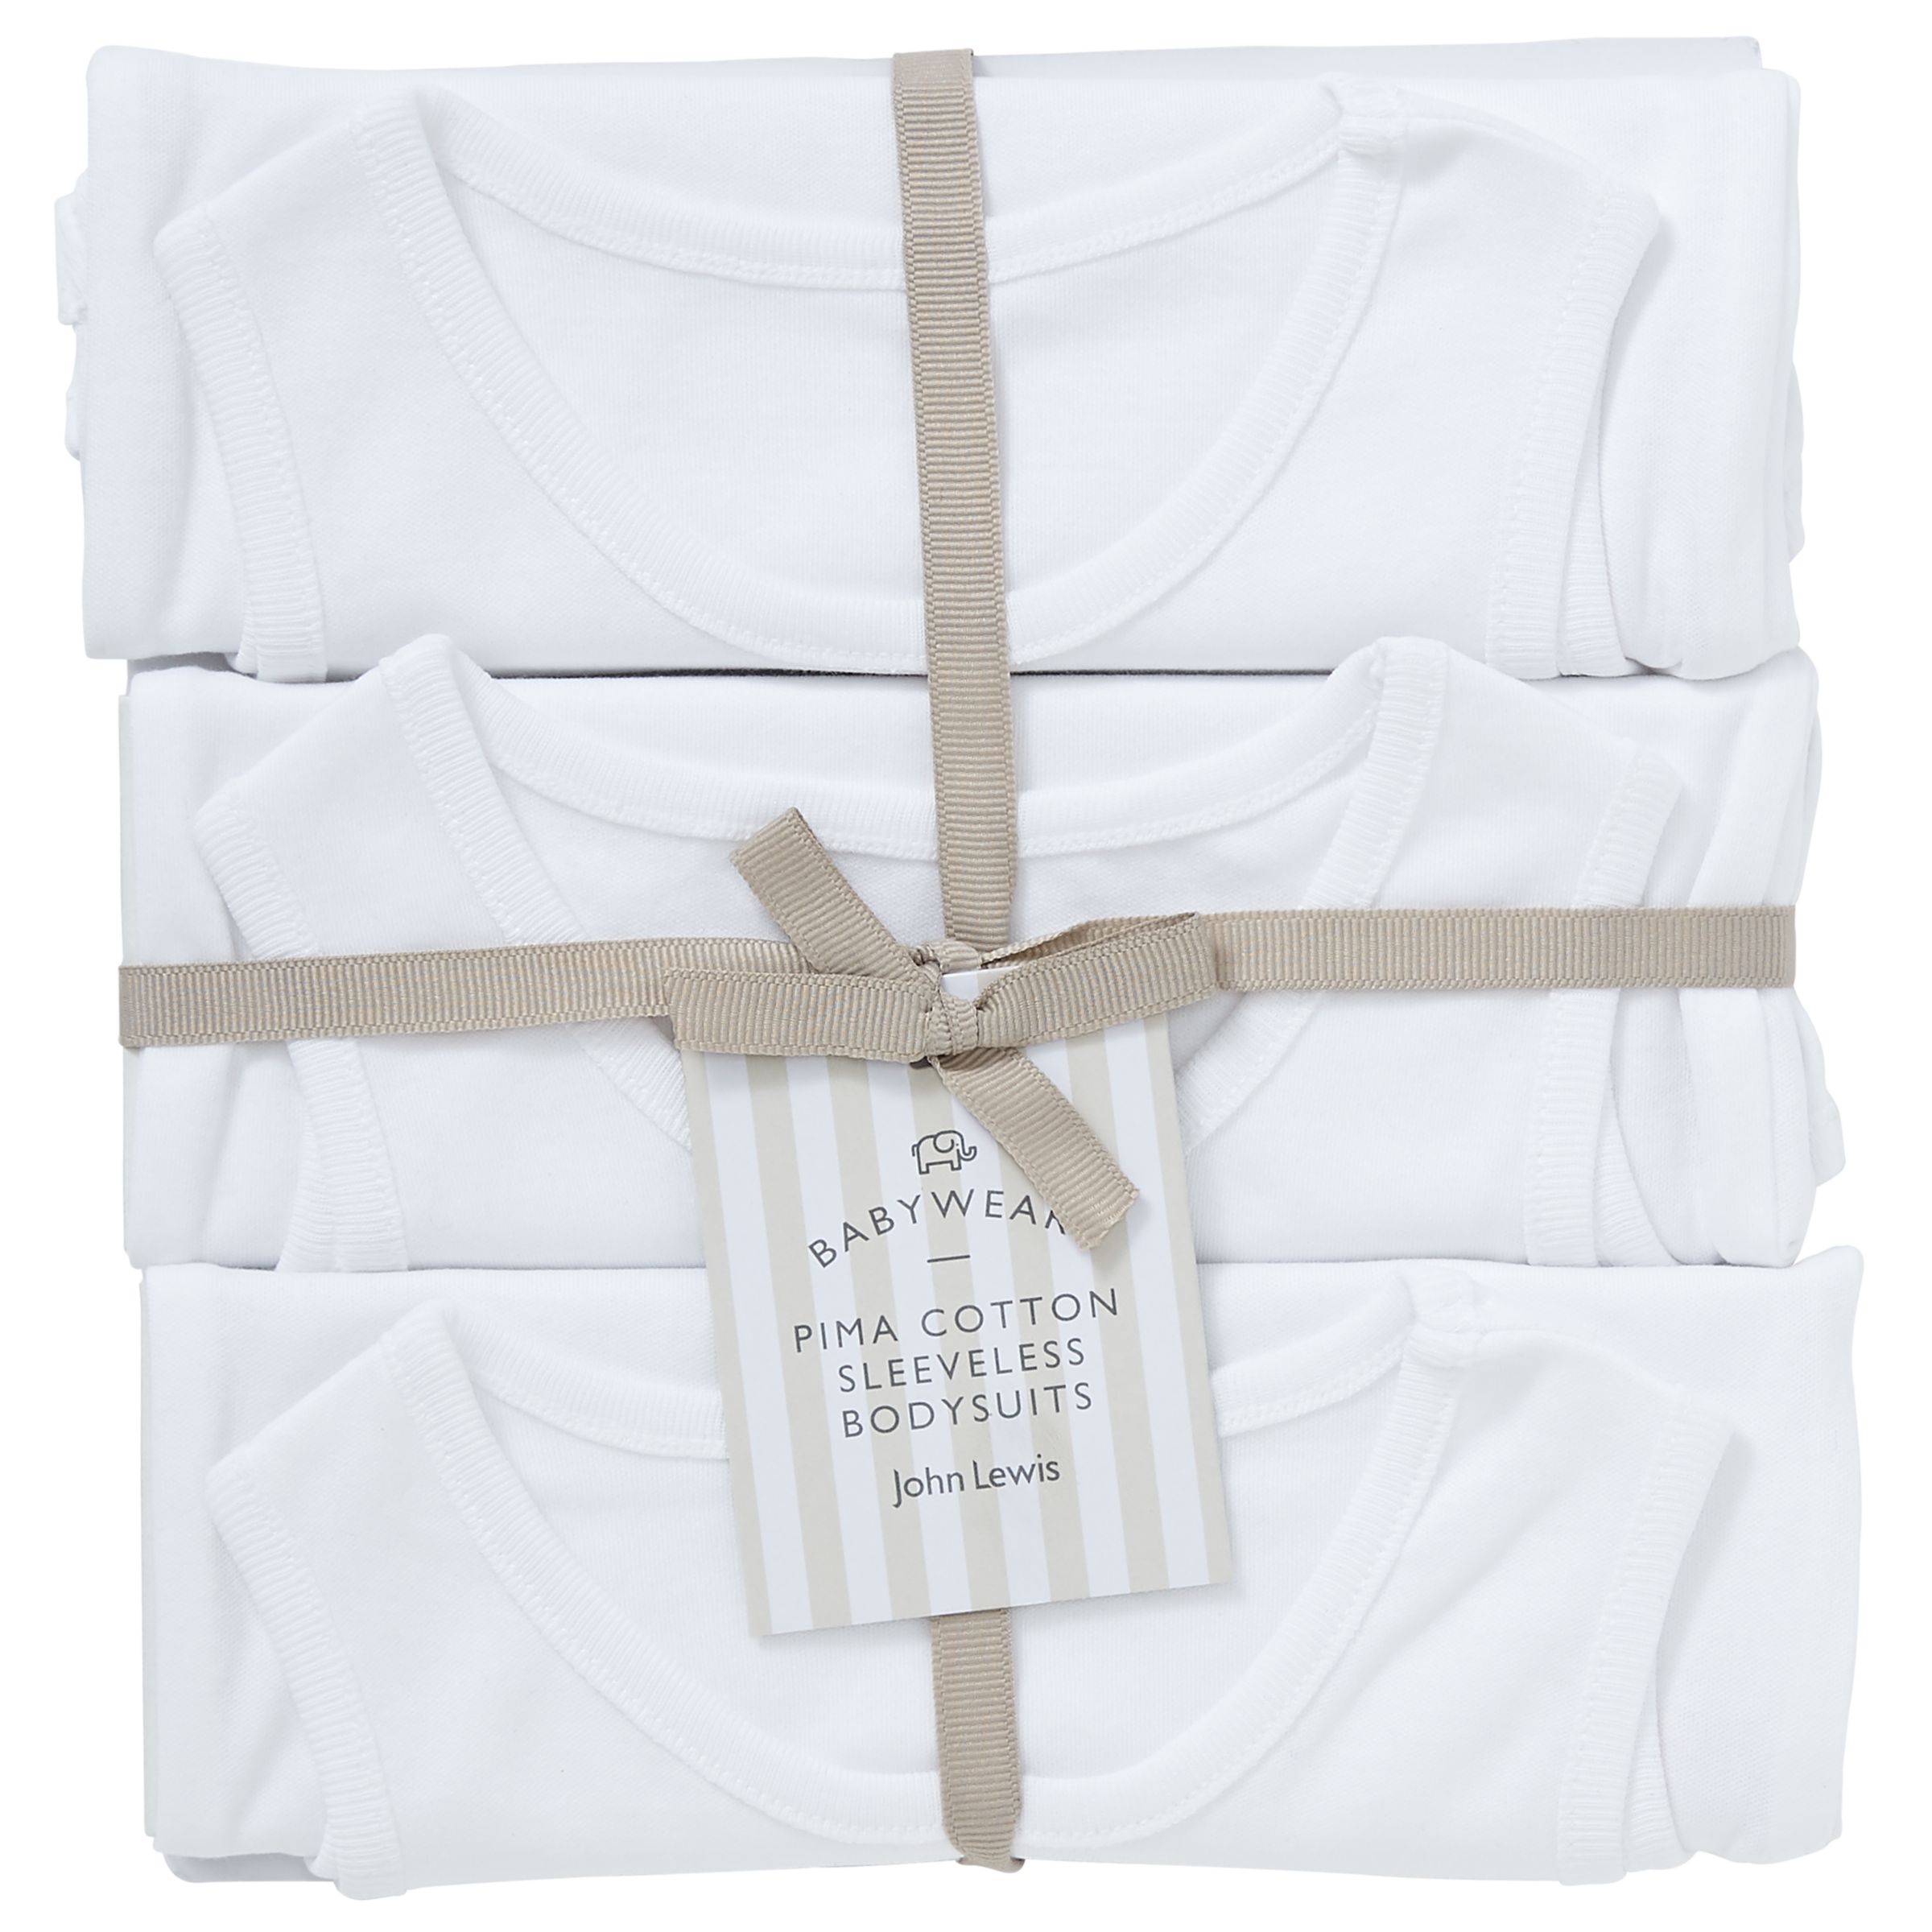 John Lewis Baby Pima Cotton Sleeveless Bodysuit, Pack of 3, White, Early baby